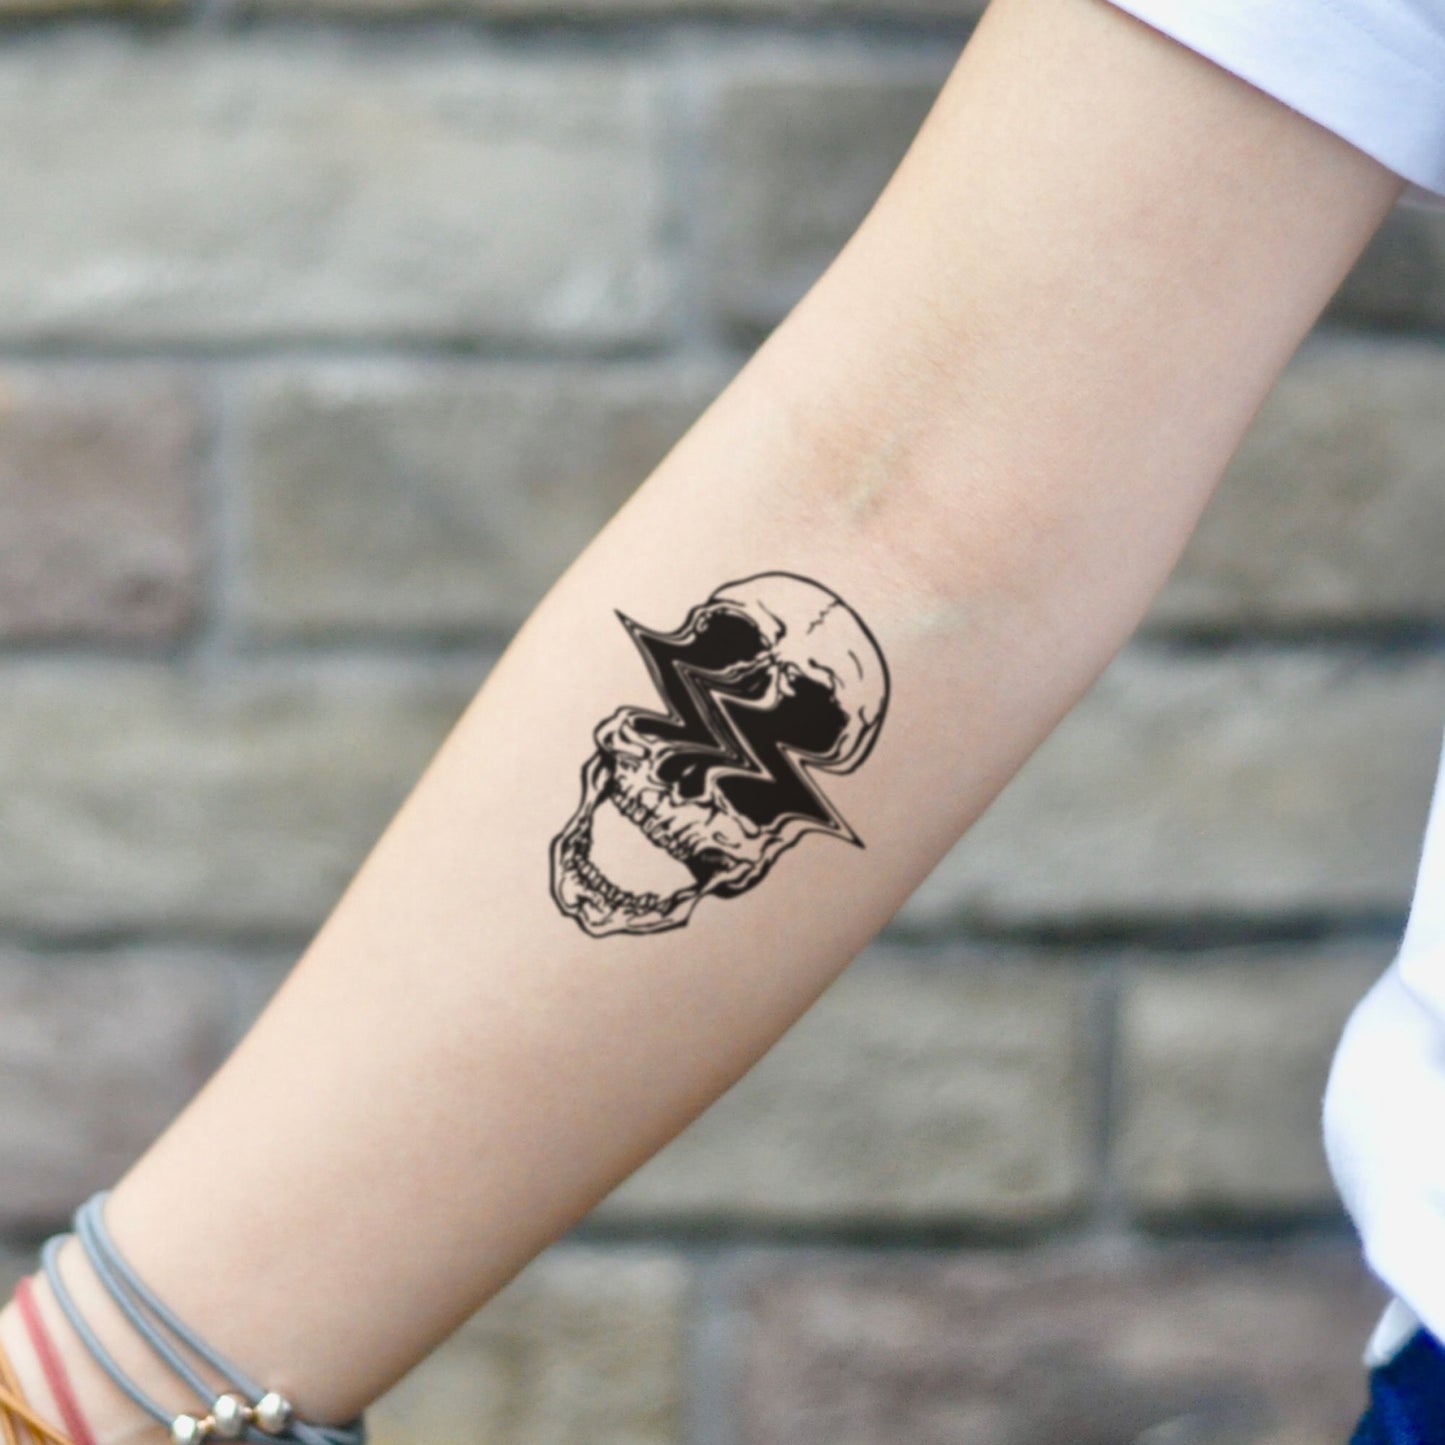 fake small glitch skull abstract trippy aesthetic illustrative temporary tattoo sticker design idea on inner arm